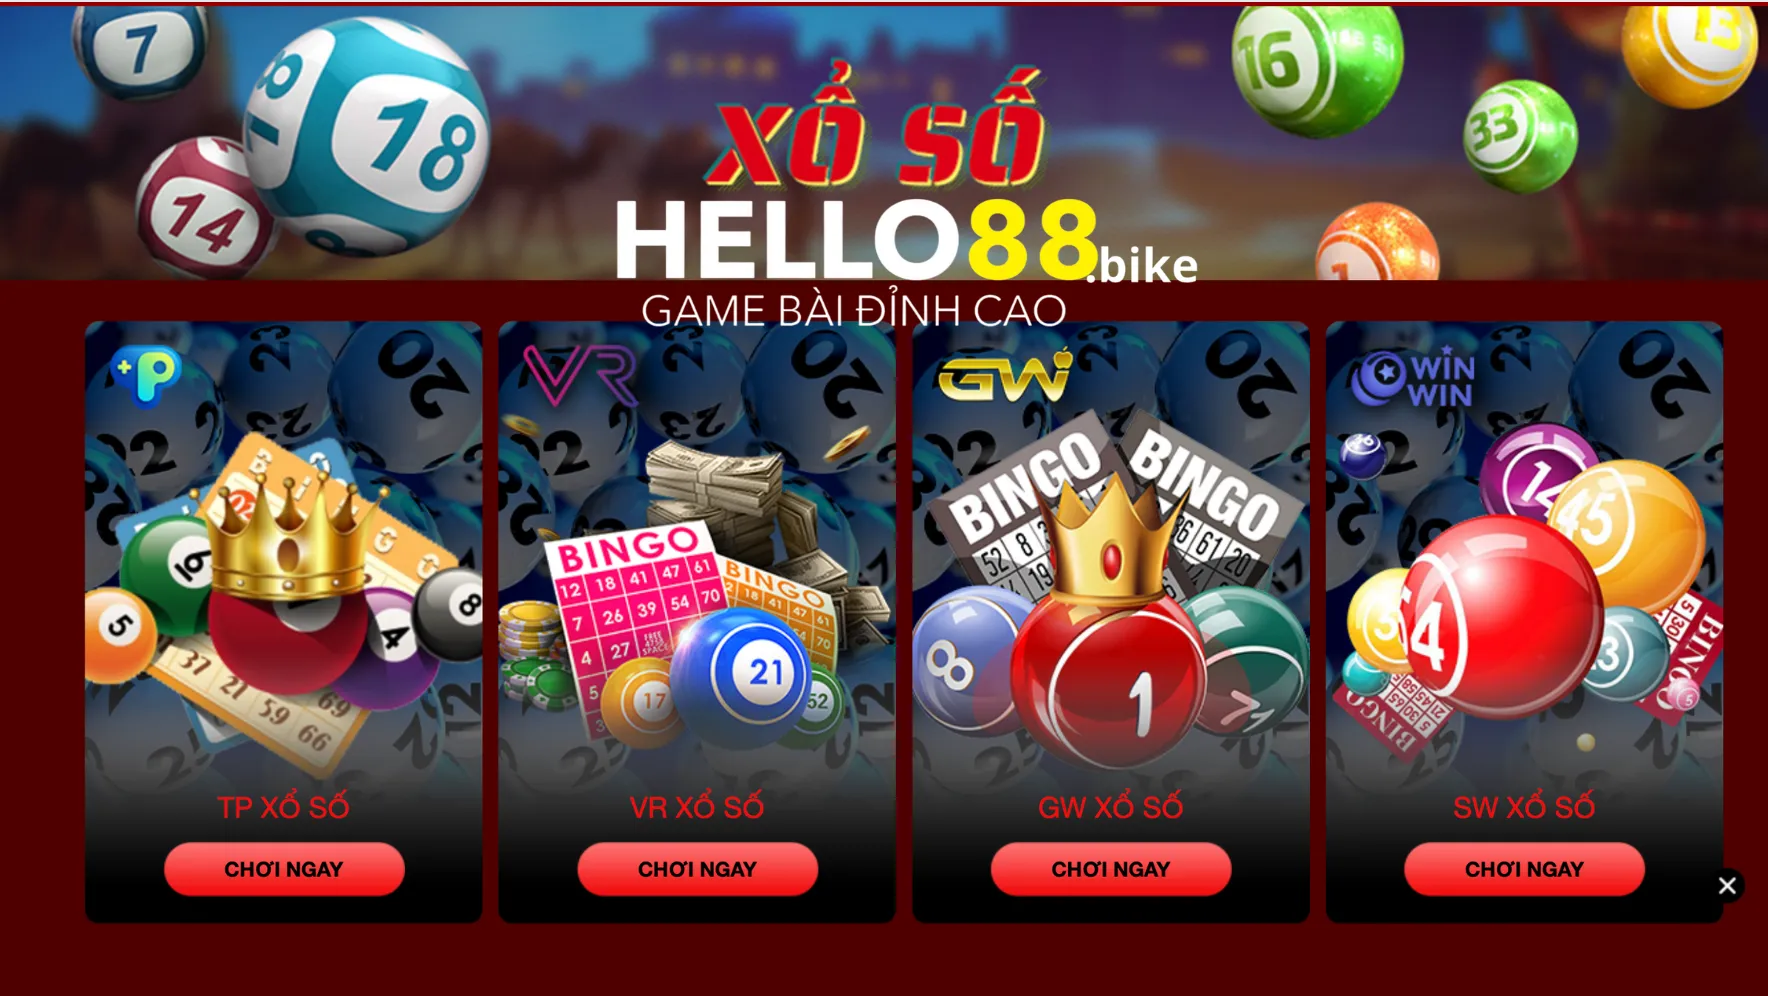 Tại sao nên tham gia chơi xổ số Hello88